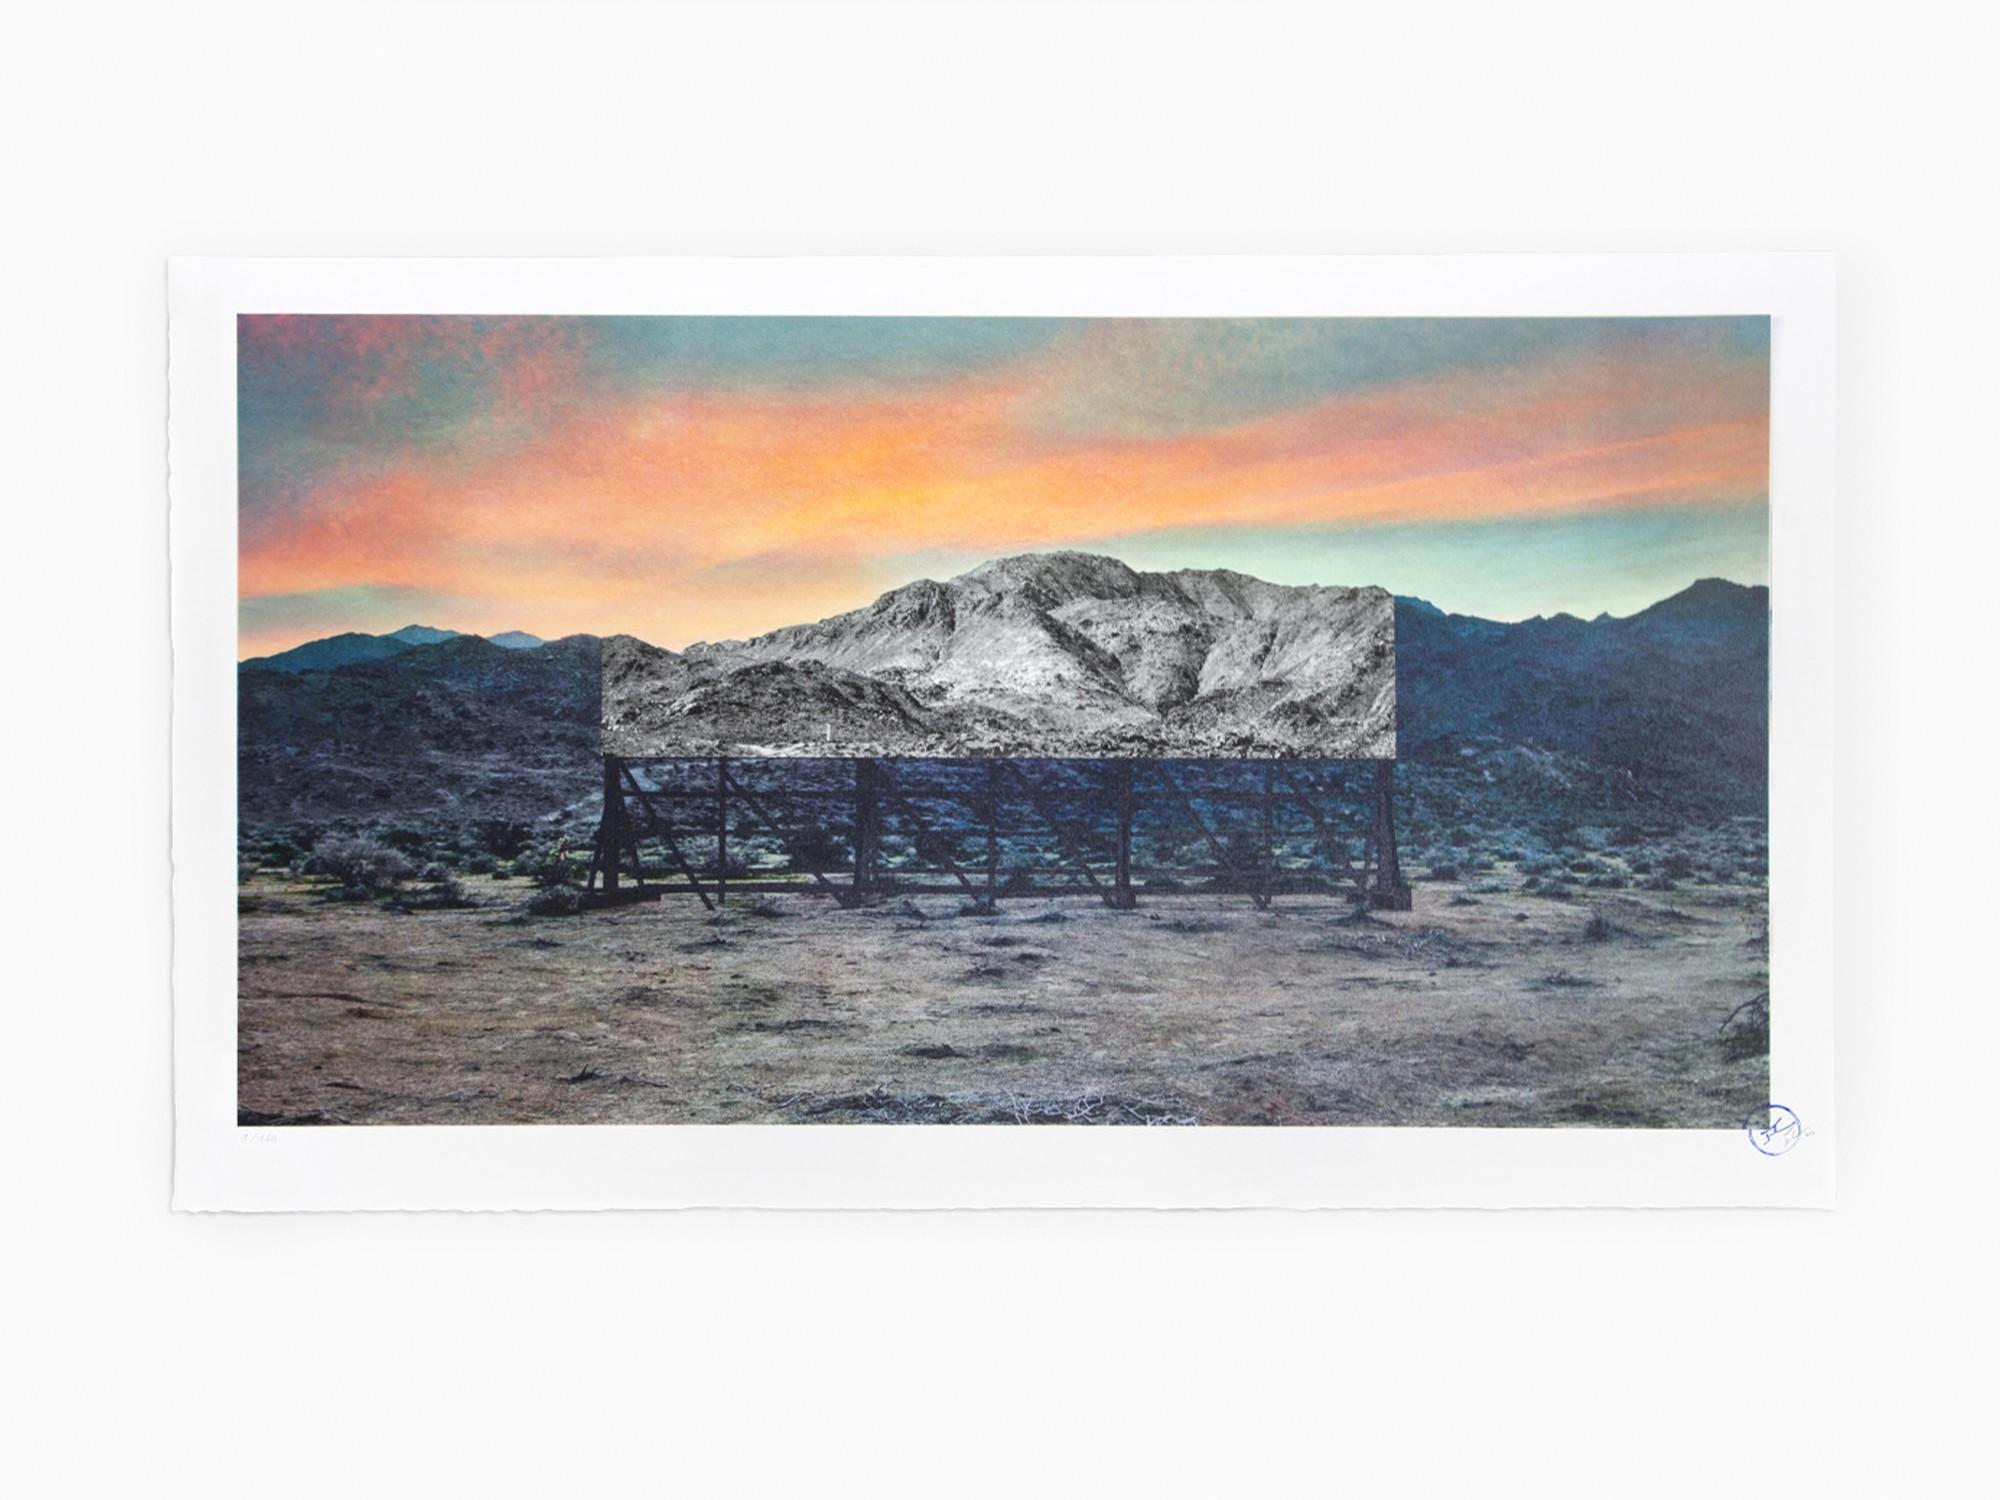 JR artist Figurative Print - Trompe l'oeil, Death Valley, Billboard, March 4, 2017, 5:41 pm, California, USA